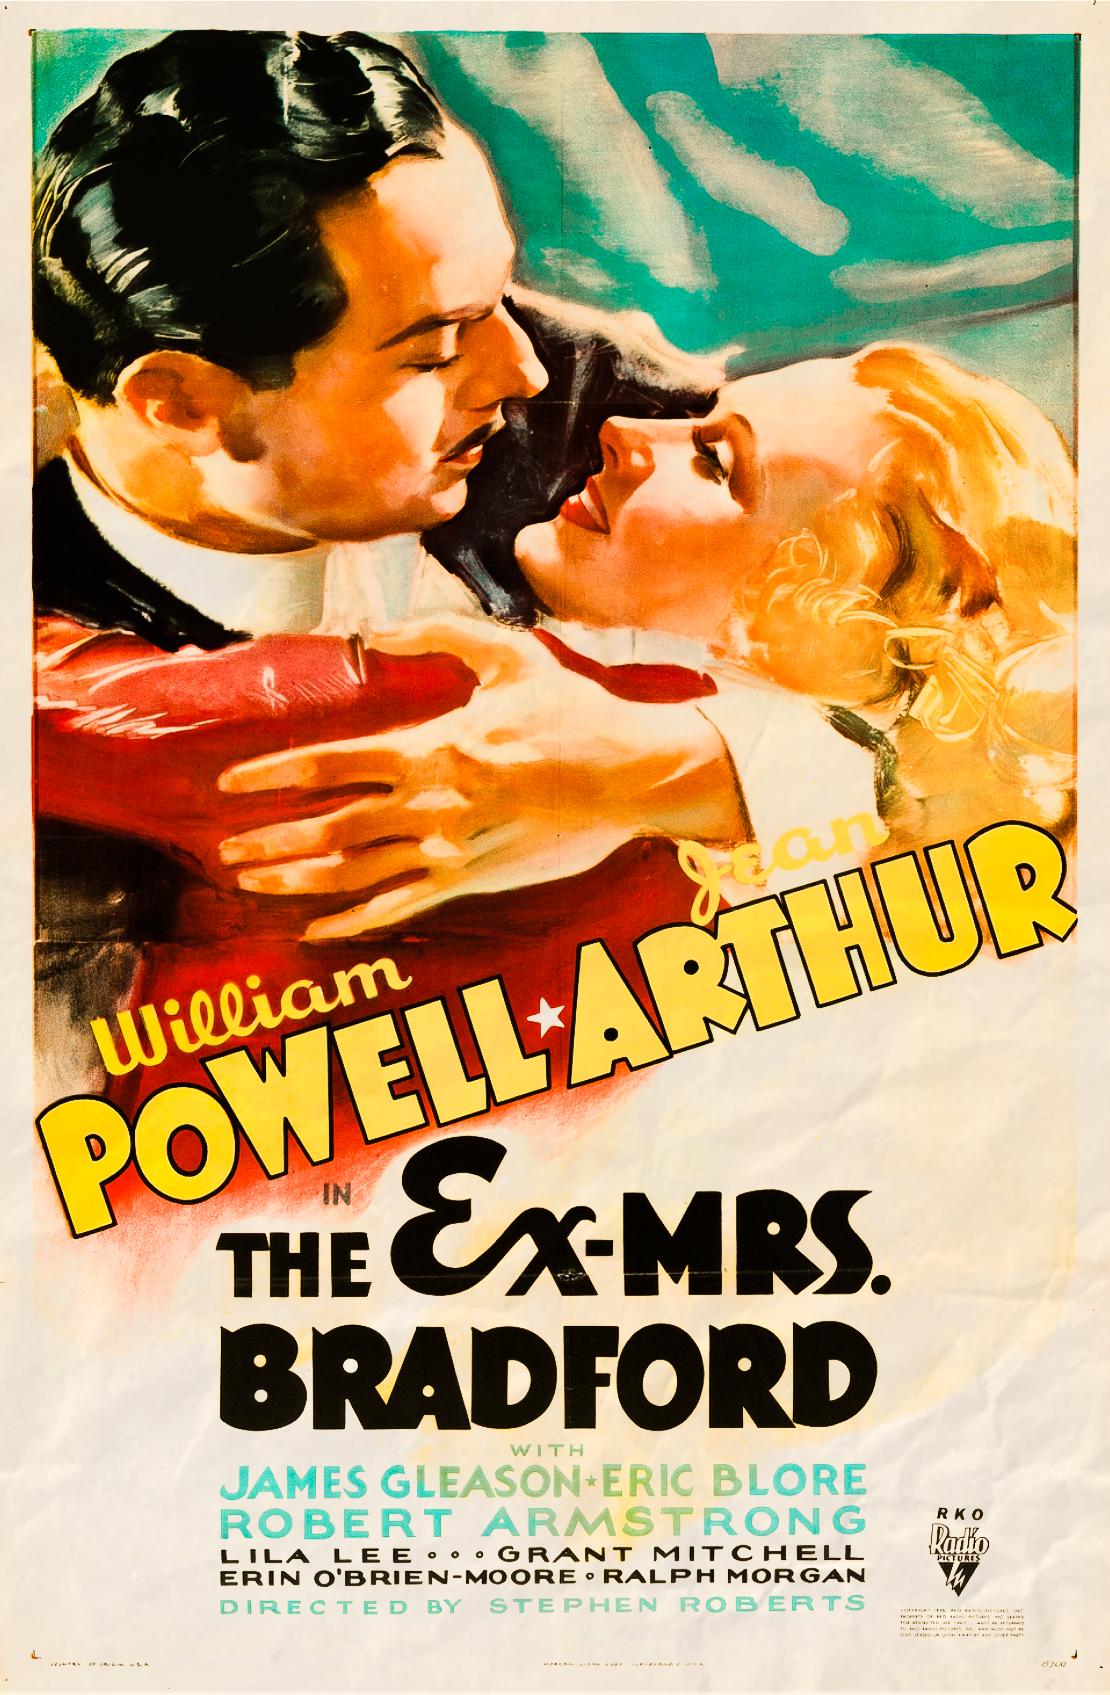 THE EX-MRS. BRADFORD (1936)